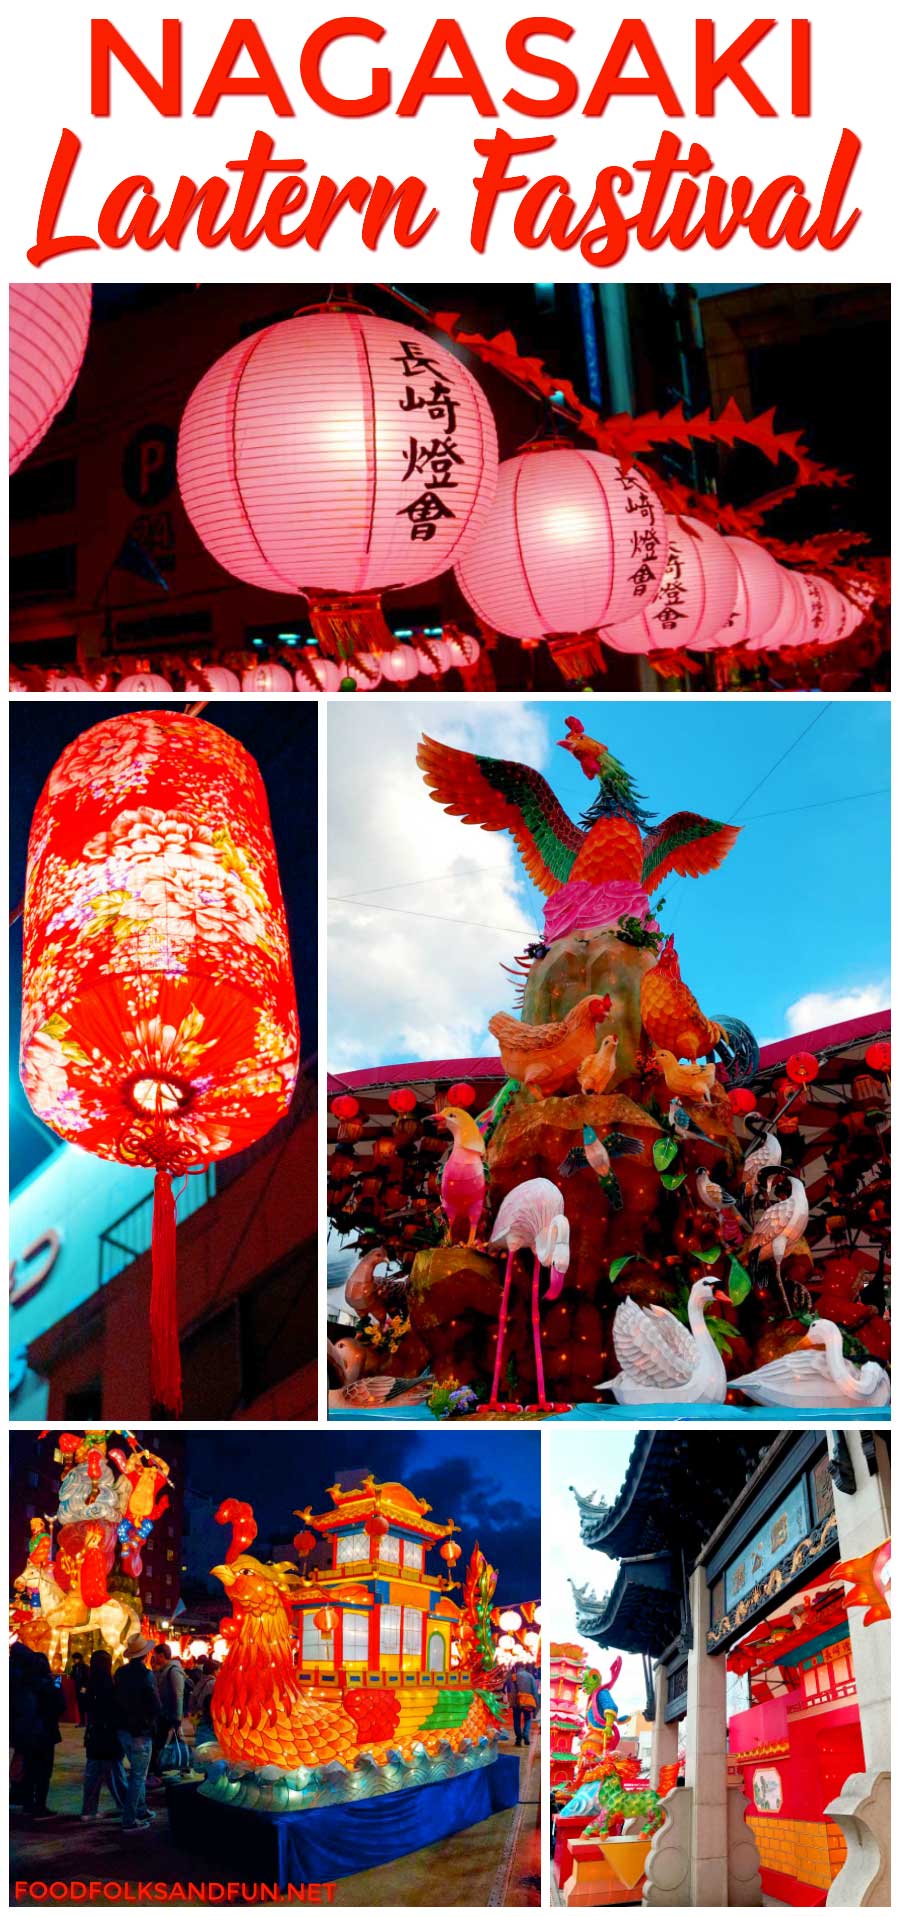 What to expect at Nagasaki Lantern Festival